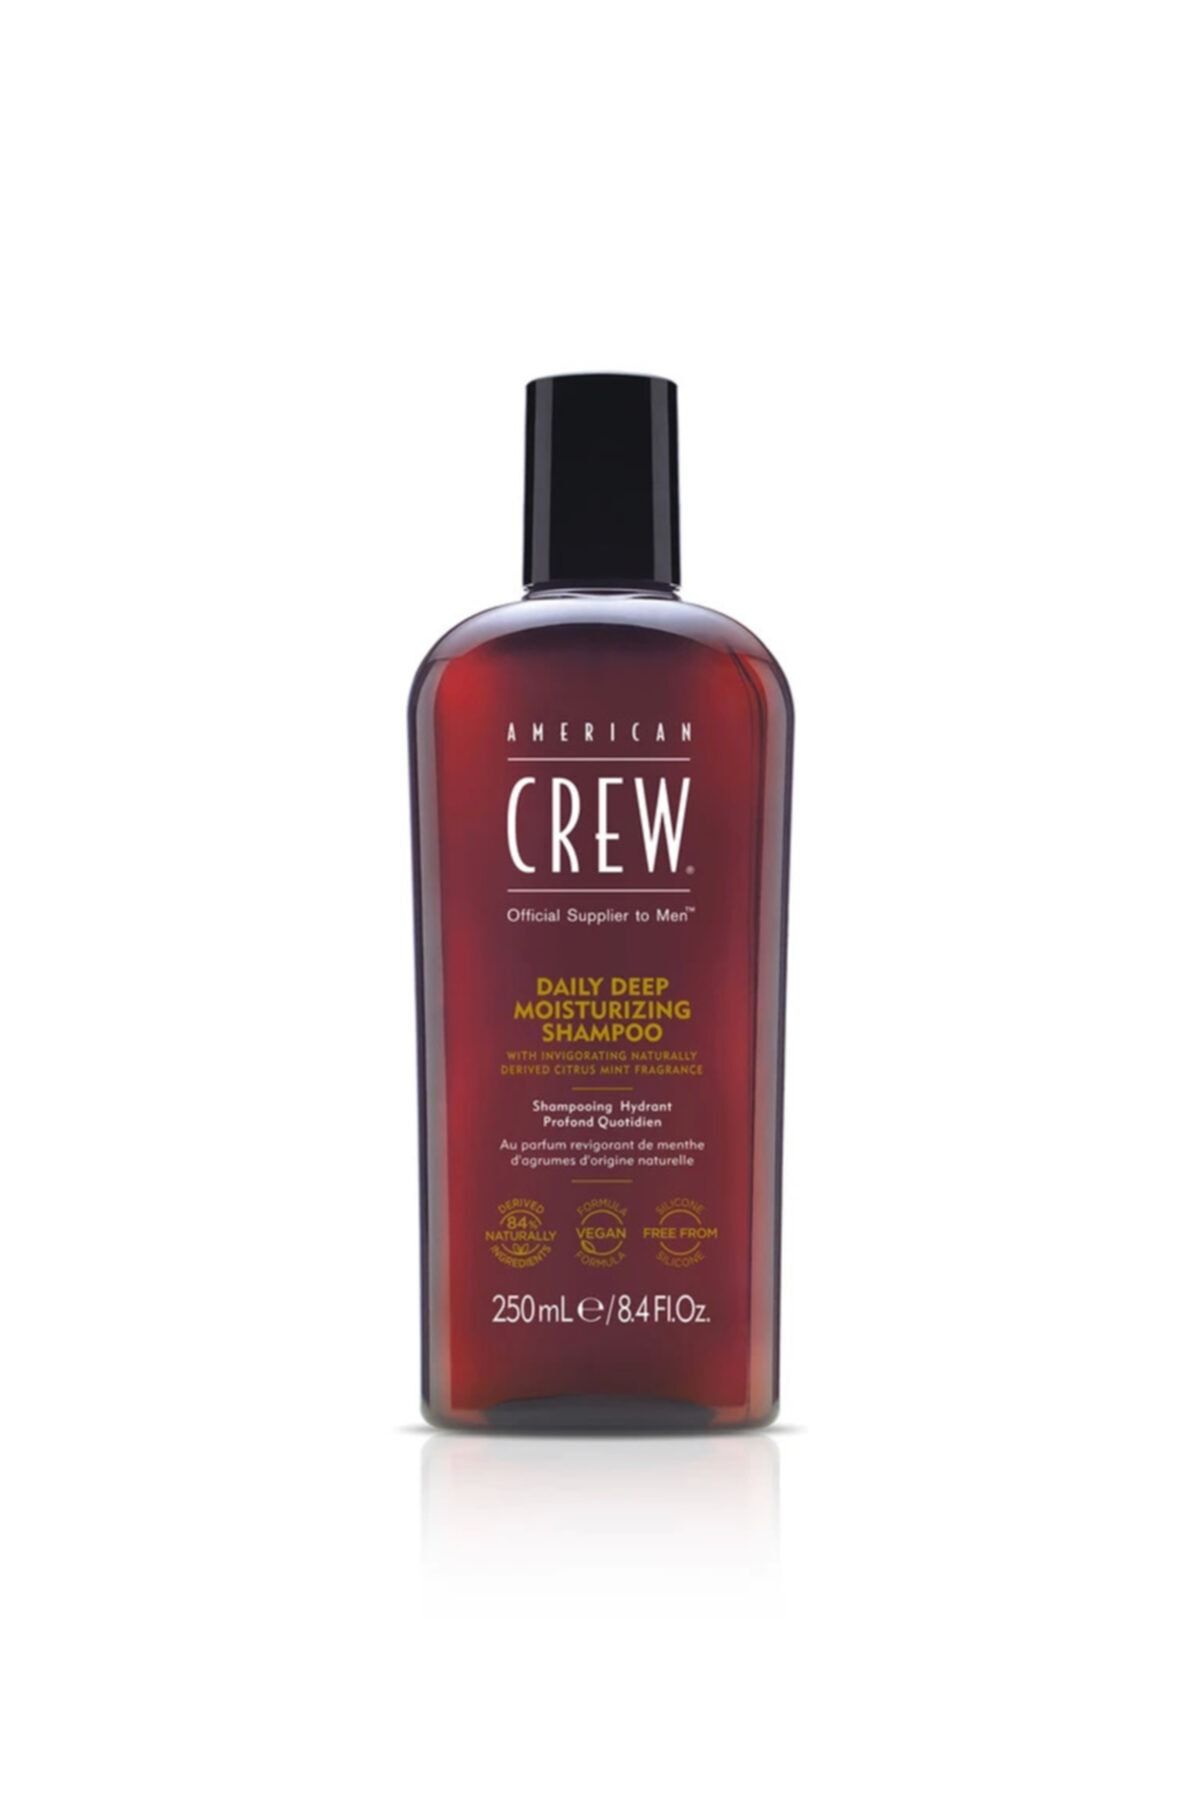 American Crew Daıly Deep Moısturızıng Shampoo 250ml Yeni